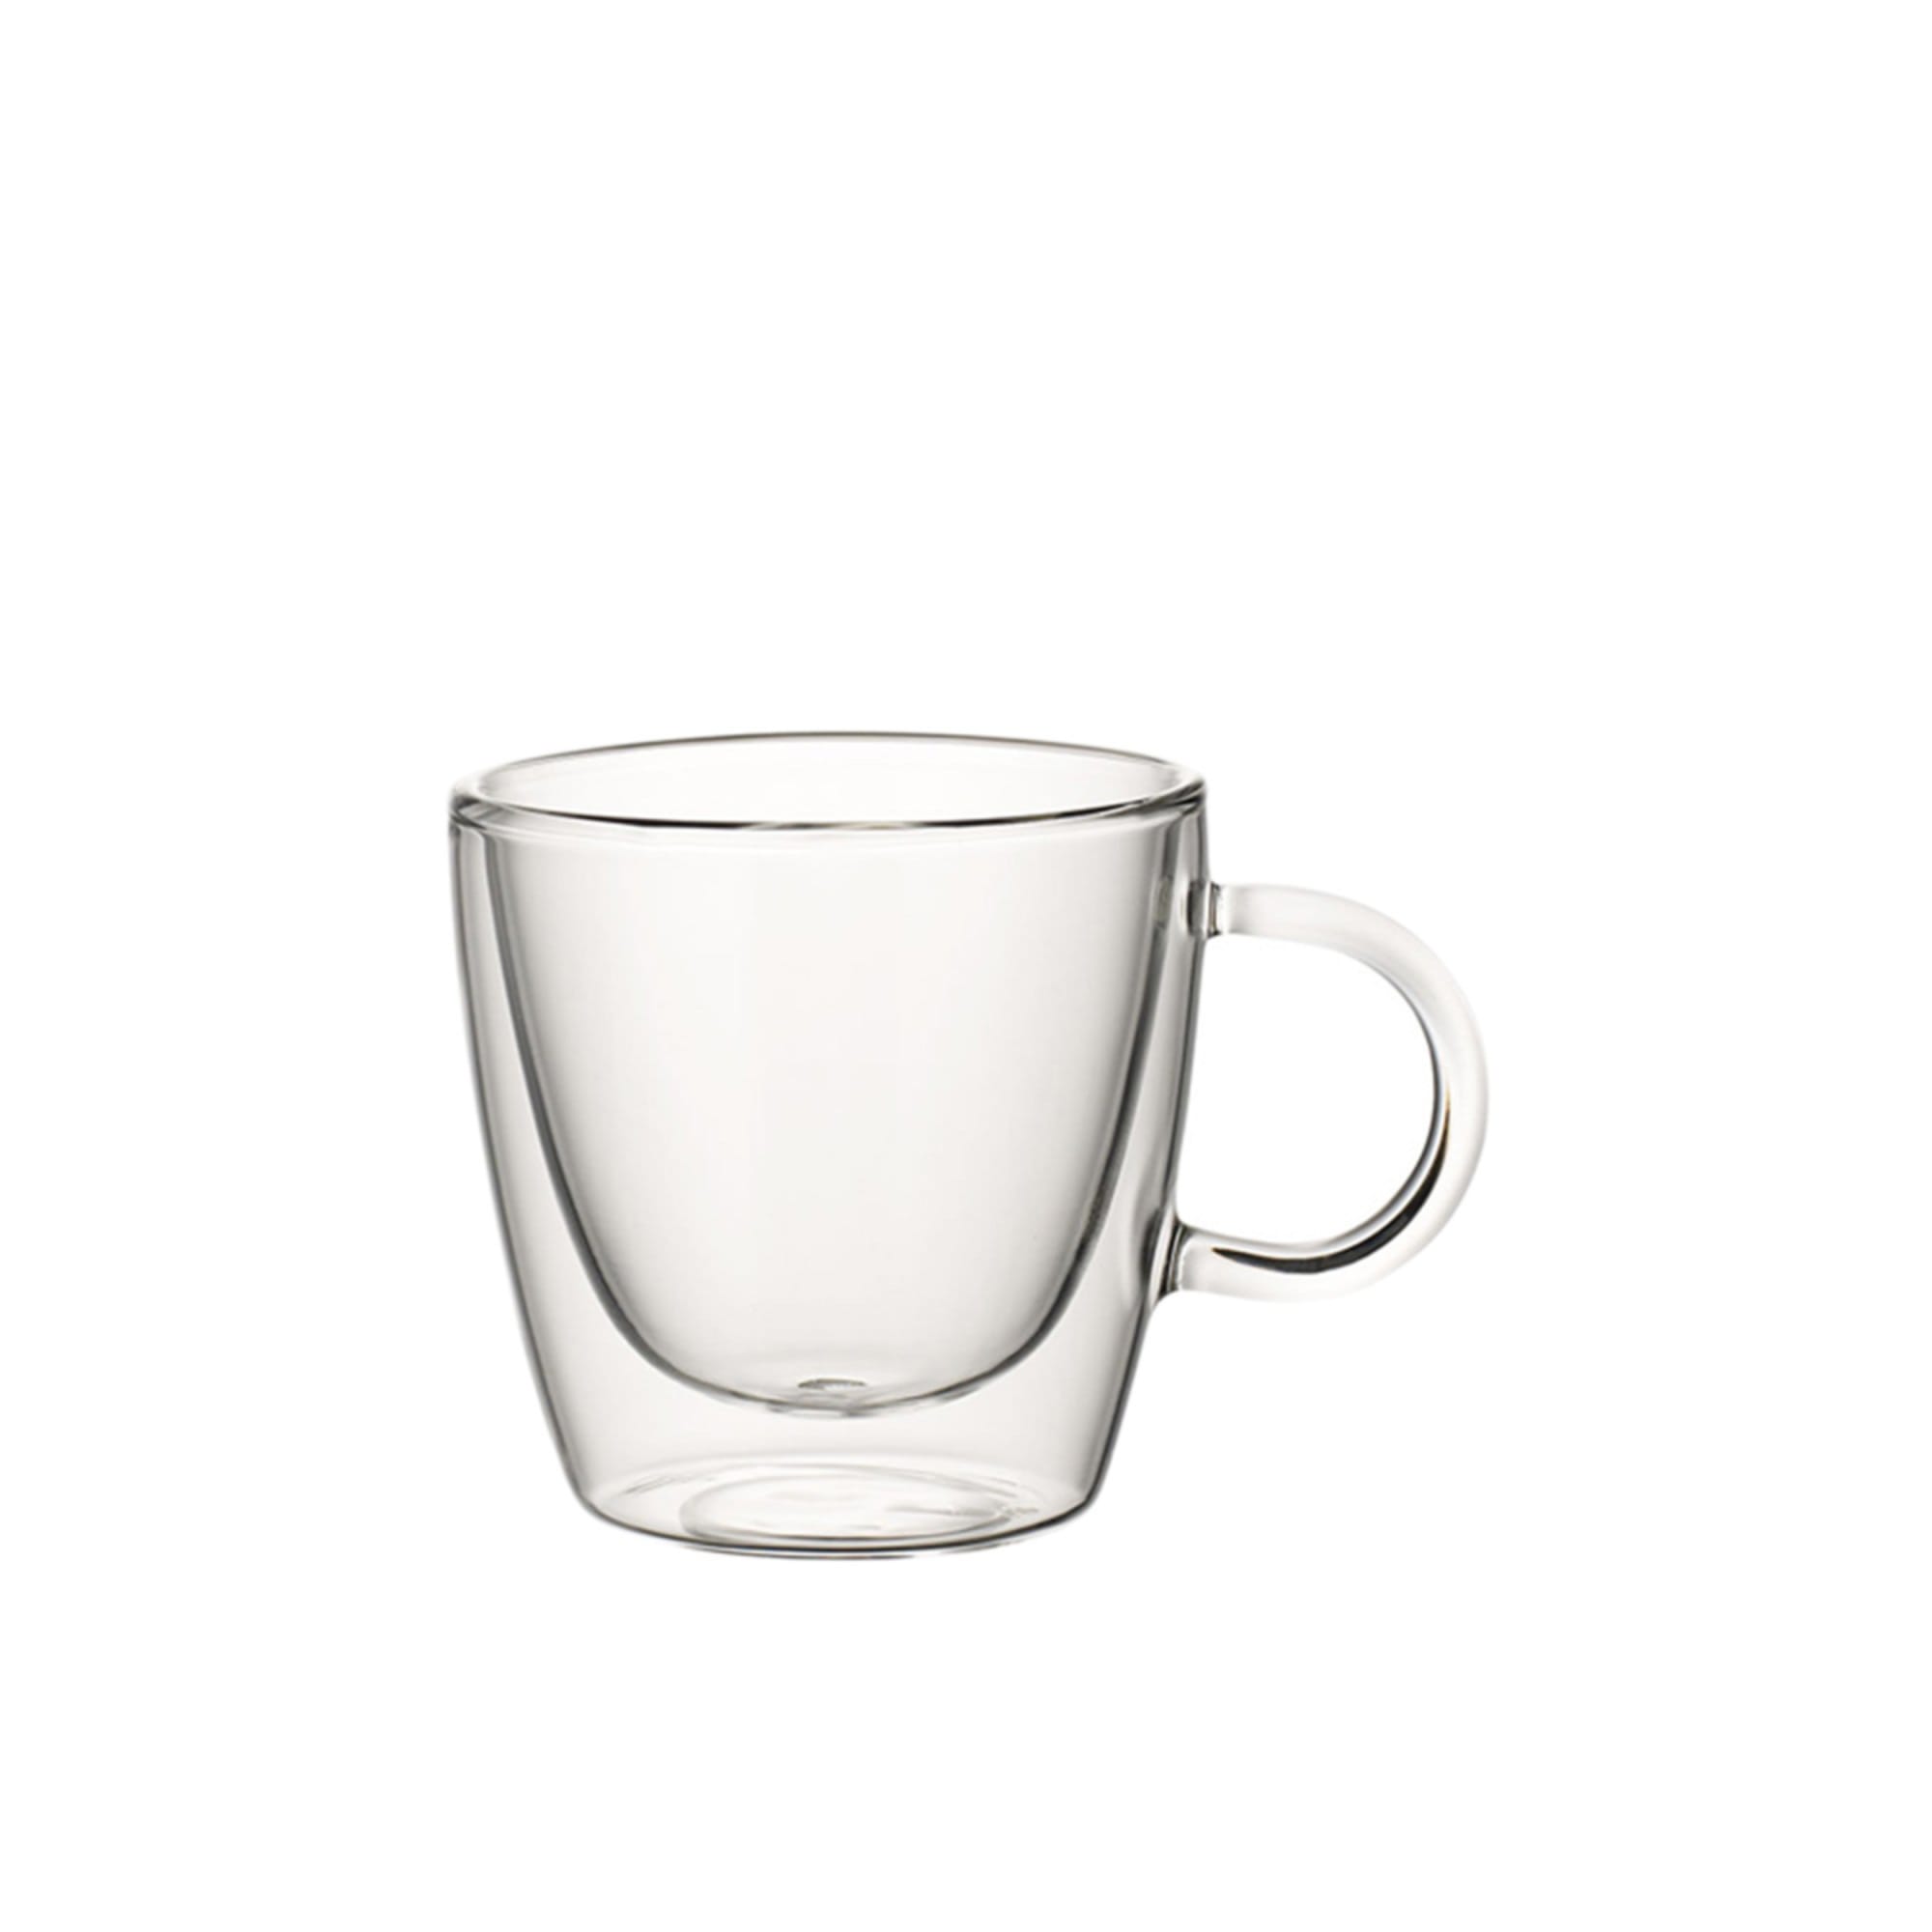 Artesano Hot & Cold Beverages Cup: Medium, Set of 2